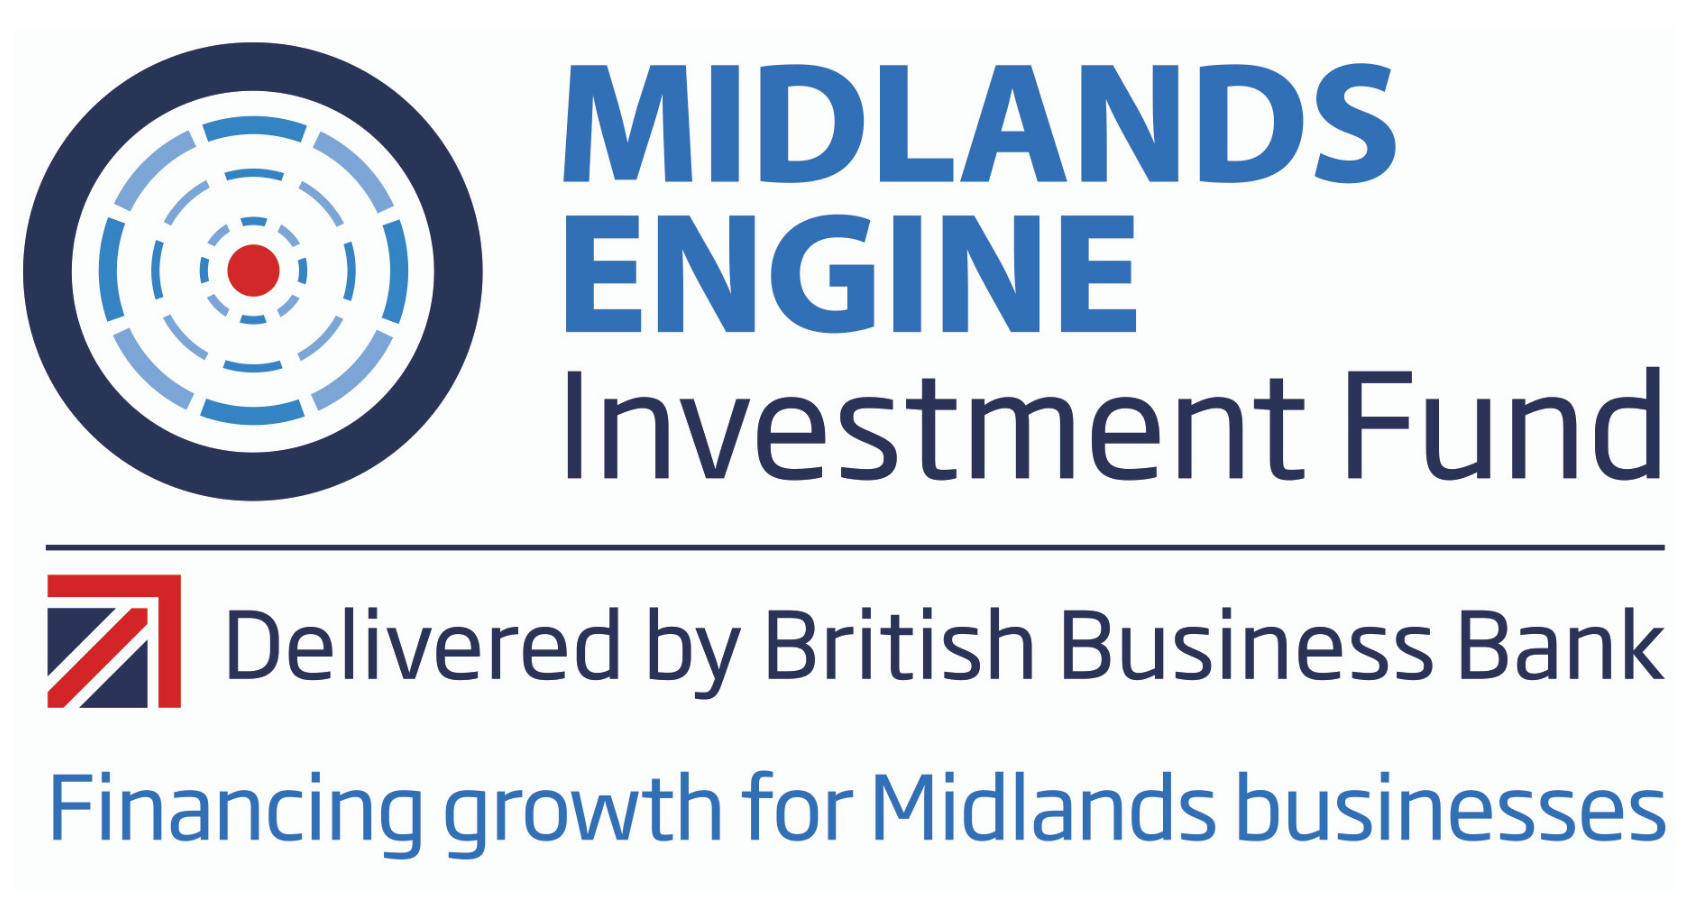 Midlands Engine Investment Fund invests £150m into region’s businesses